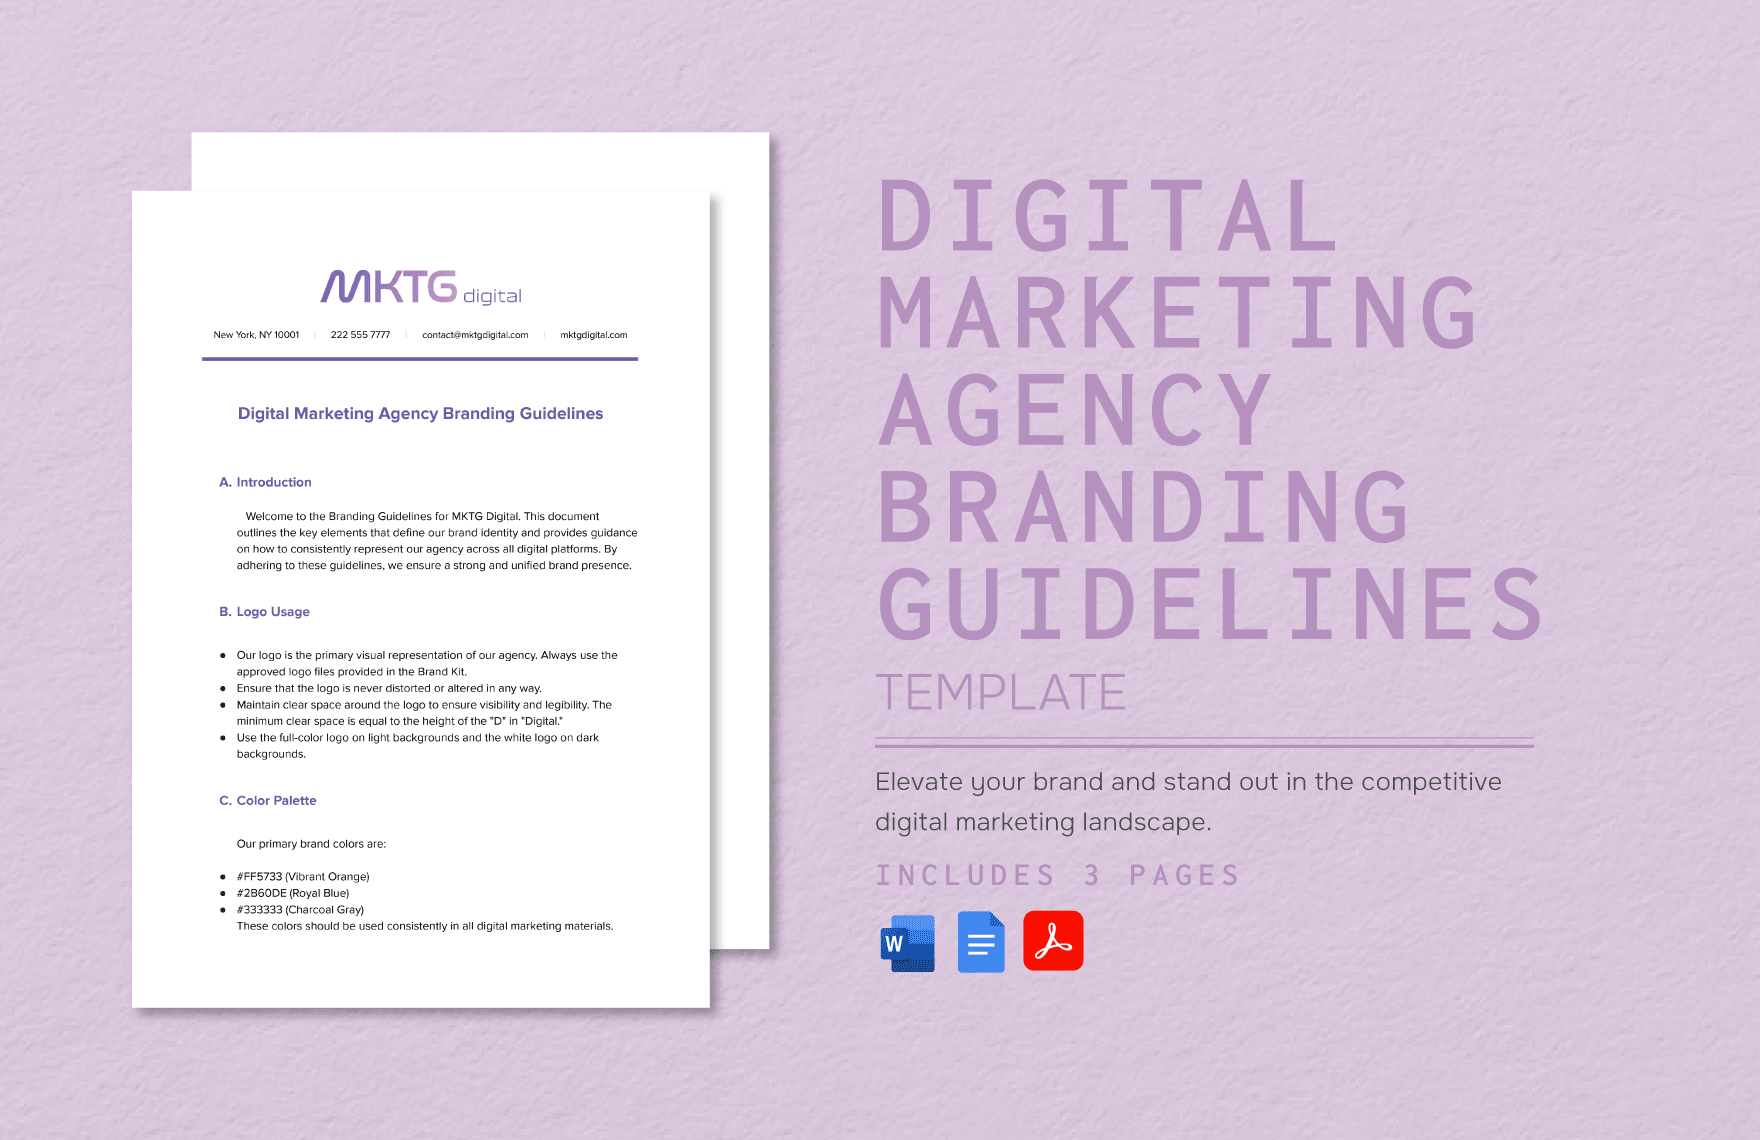 Digital Marketing Agency Branding Guidelines Template